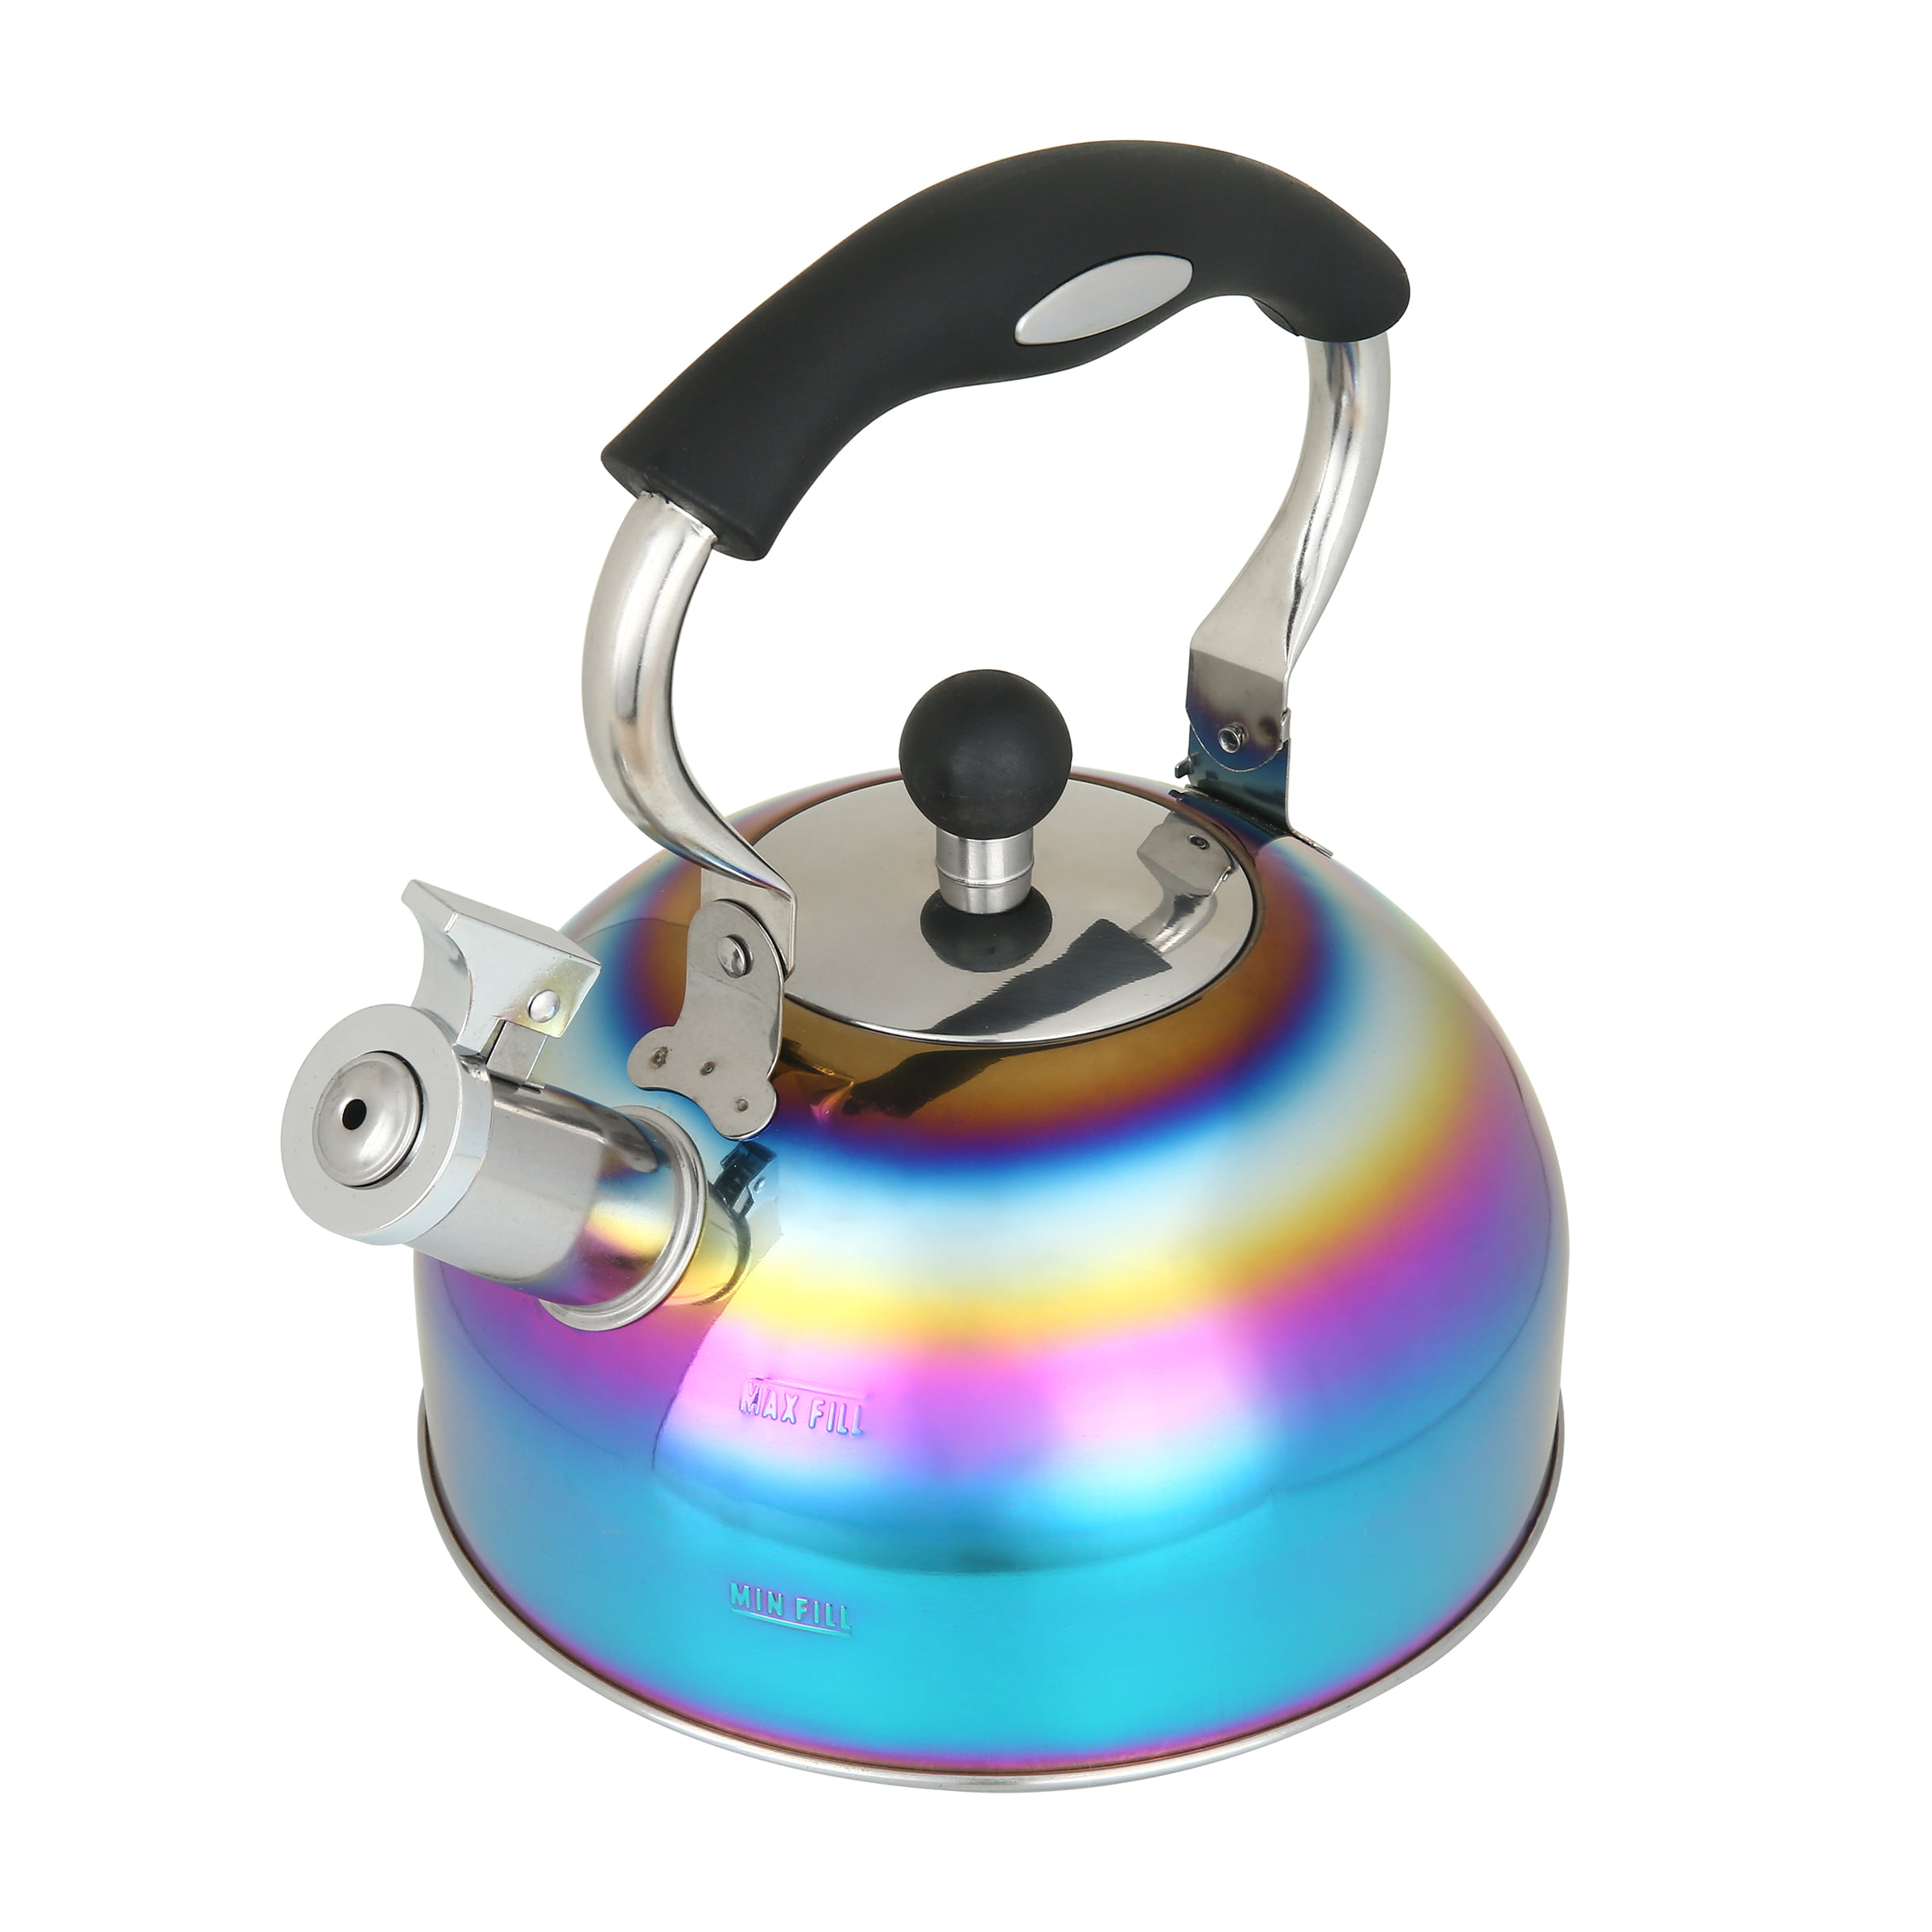 Mainstays Stainless Steel 2.5 Liter Rainbow Tea Kettle